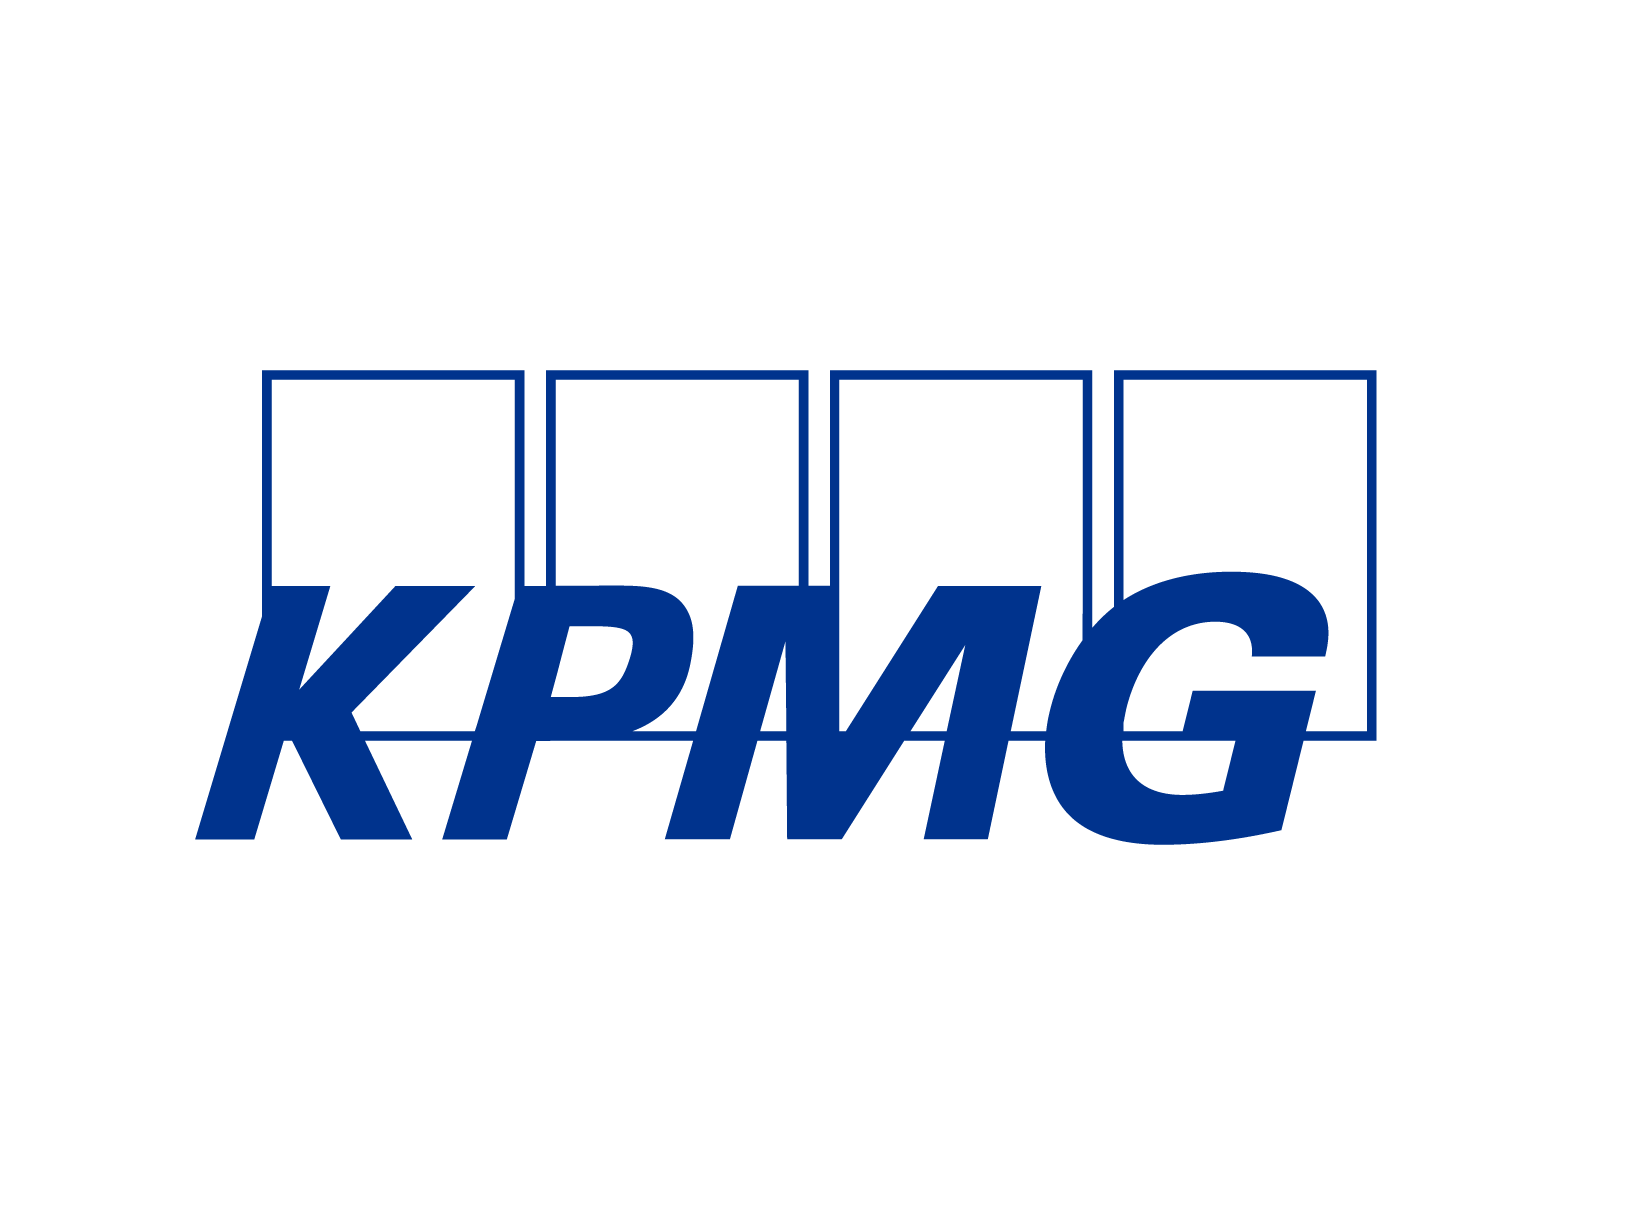 KPMG Blue